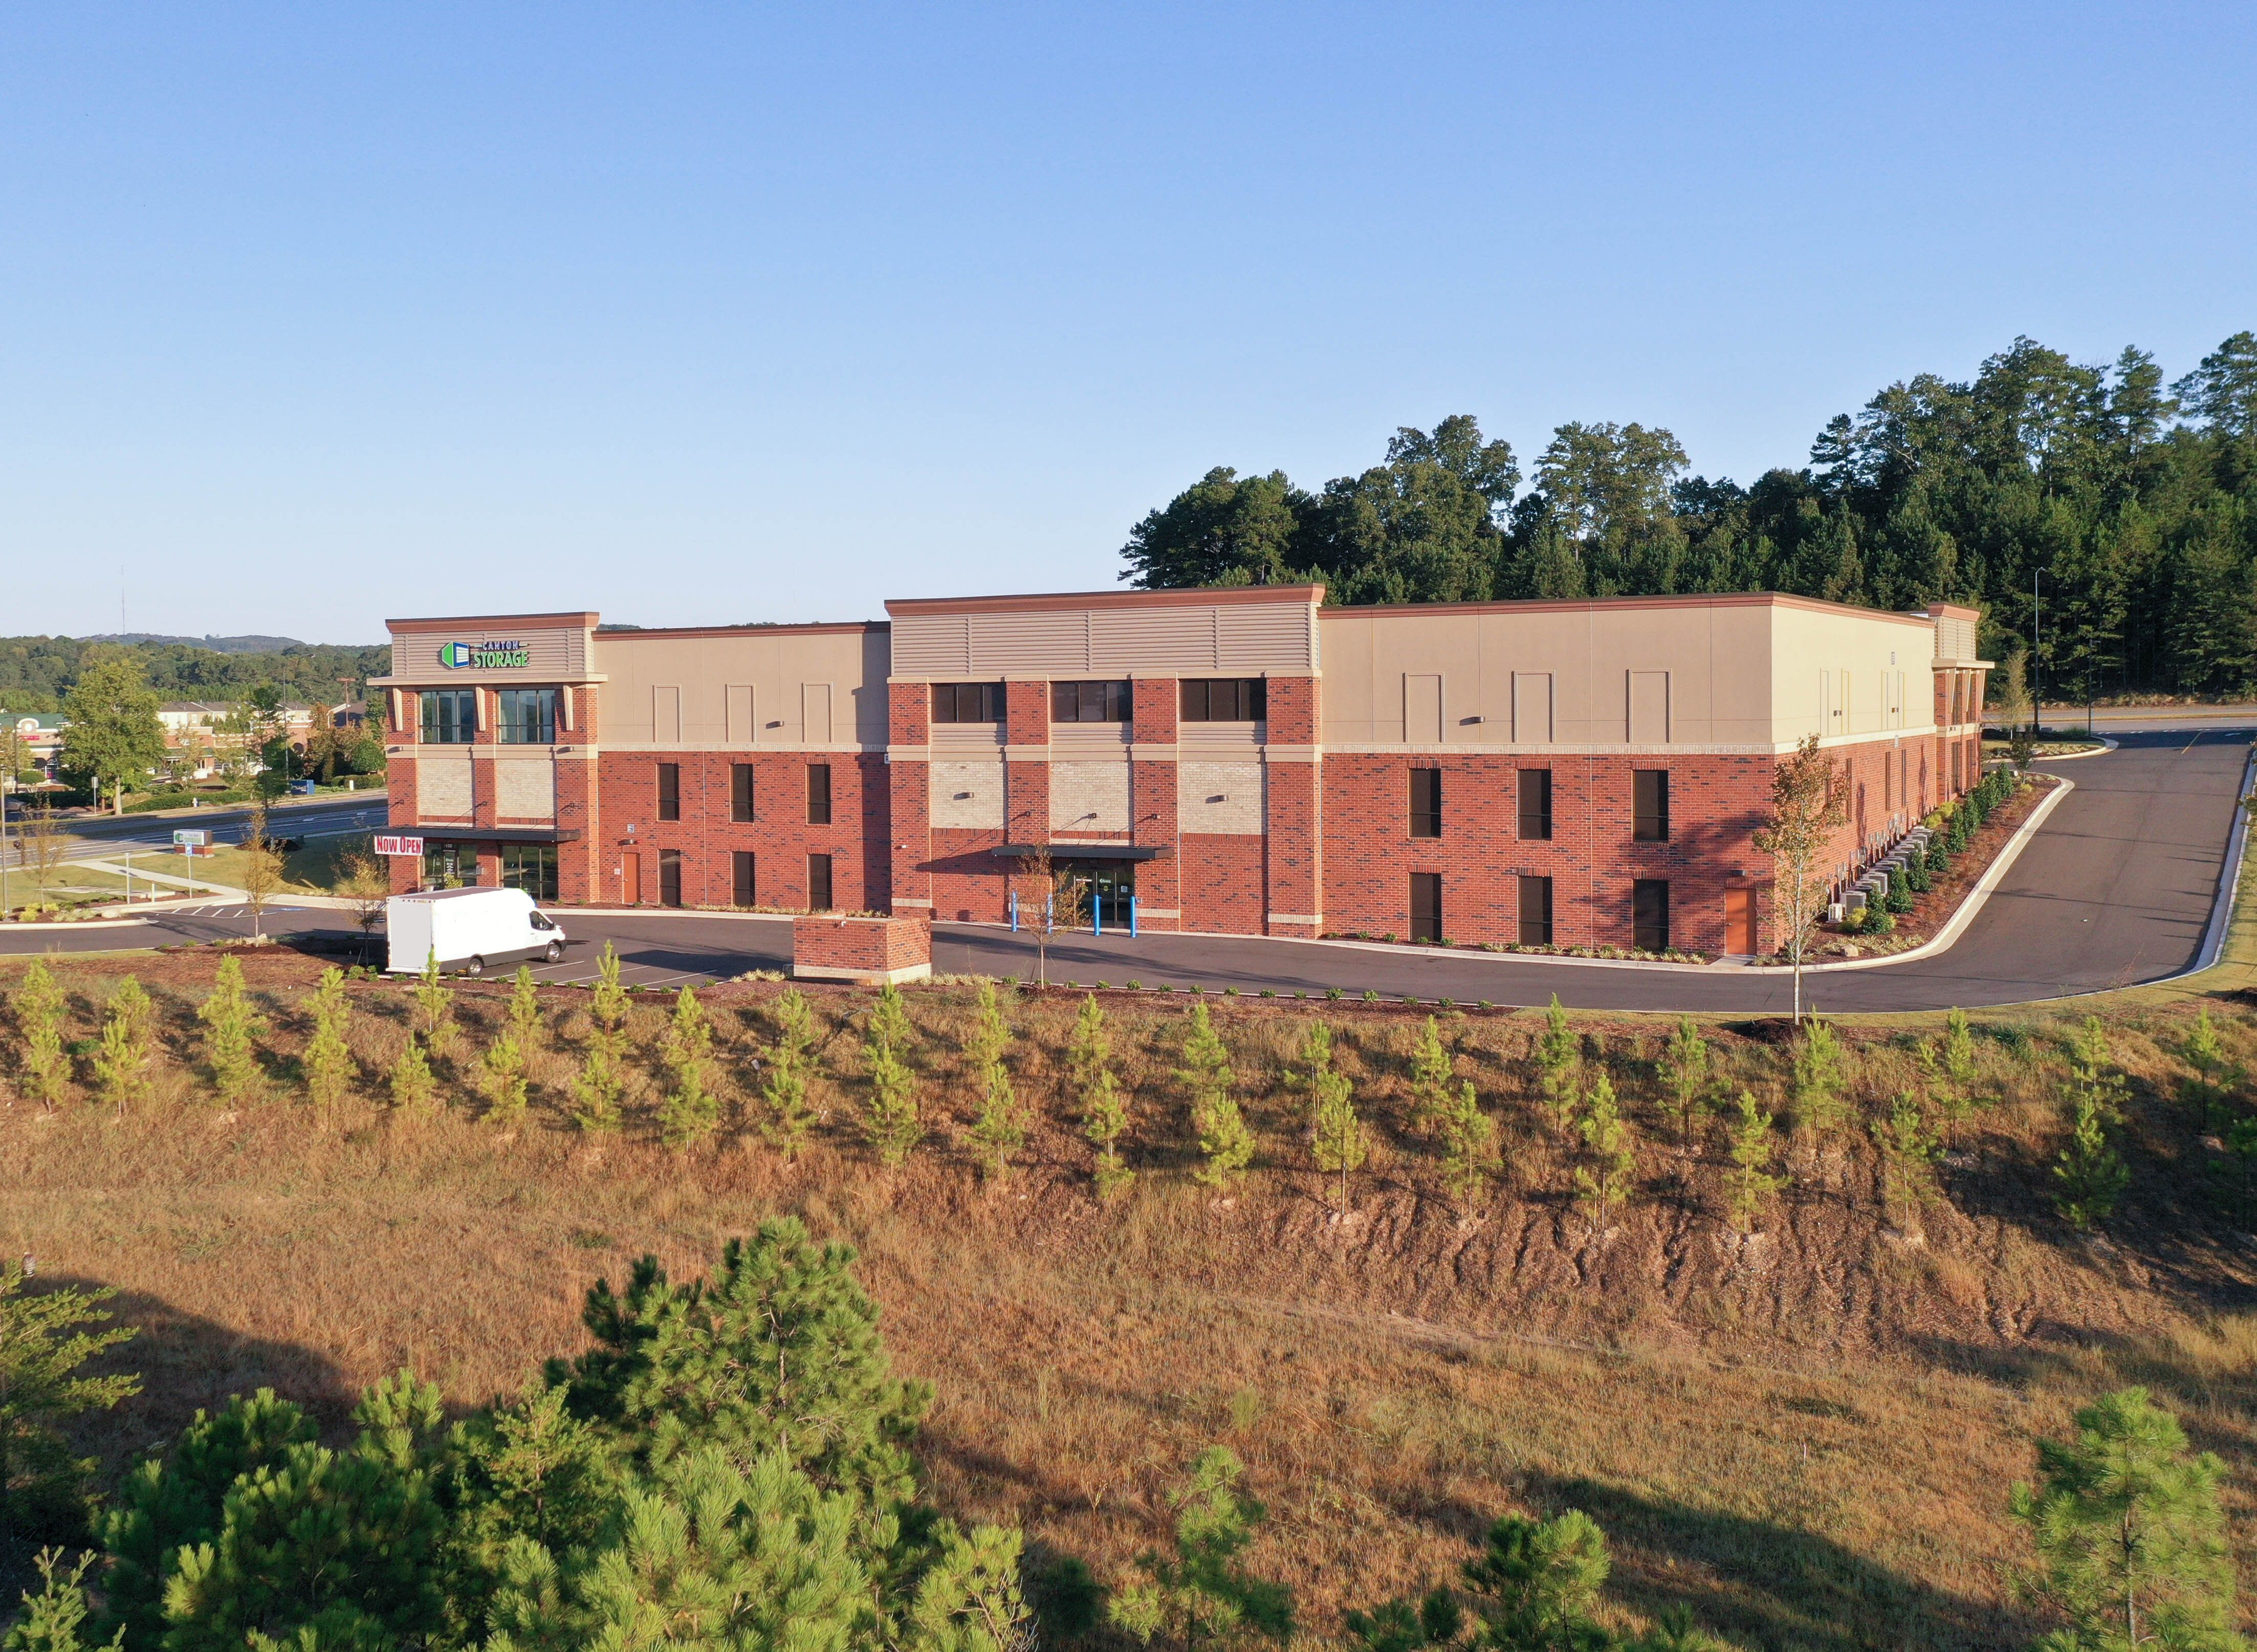 Superior Storage - Canton is located at 150 Reinhardt College Pkwy in Canton, GA.